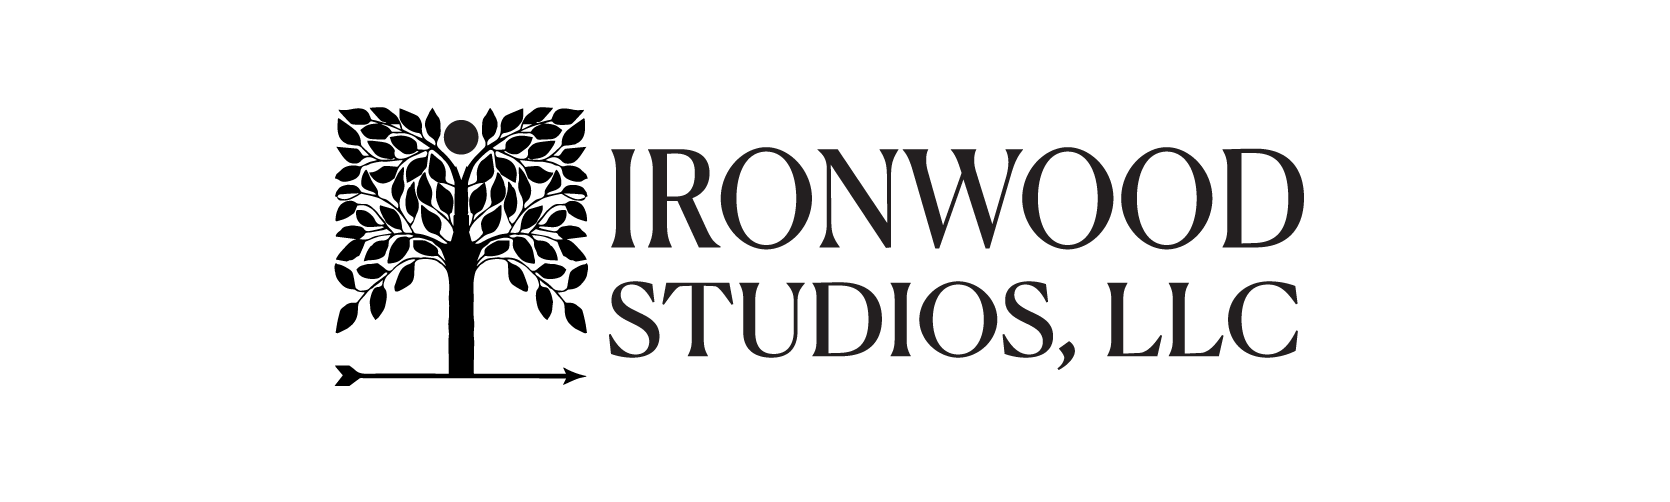 IRONWOOD STUDIOS, LLC